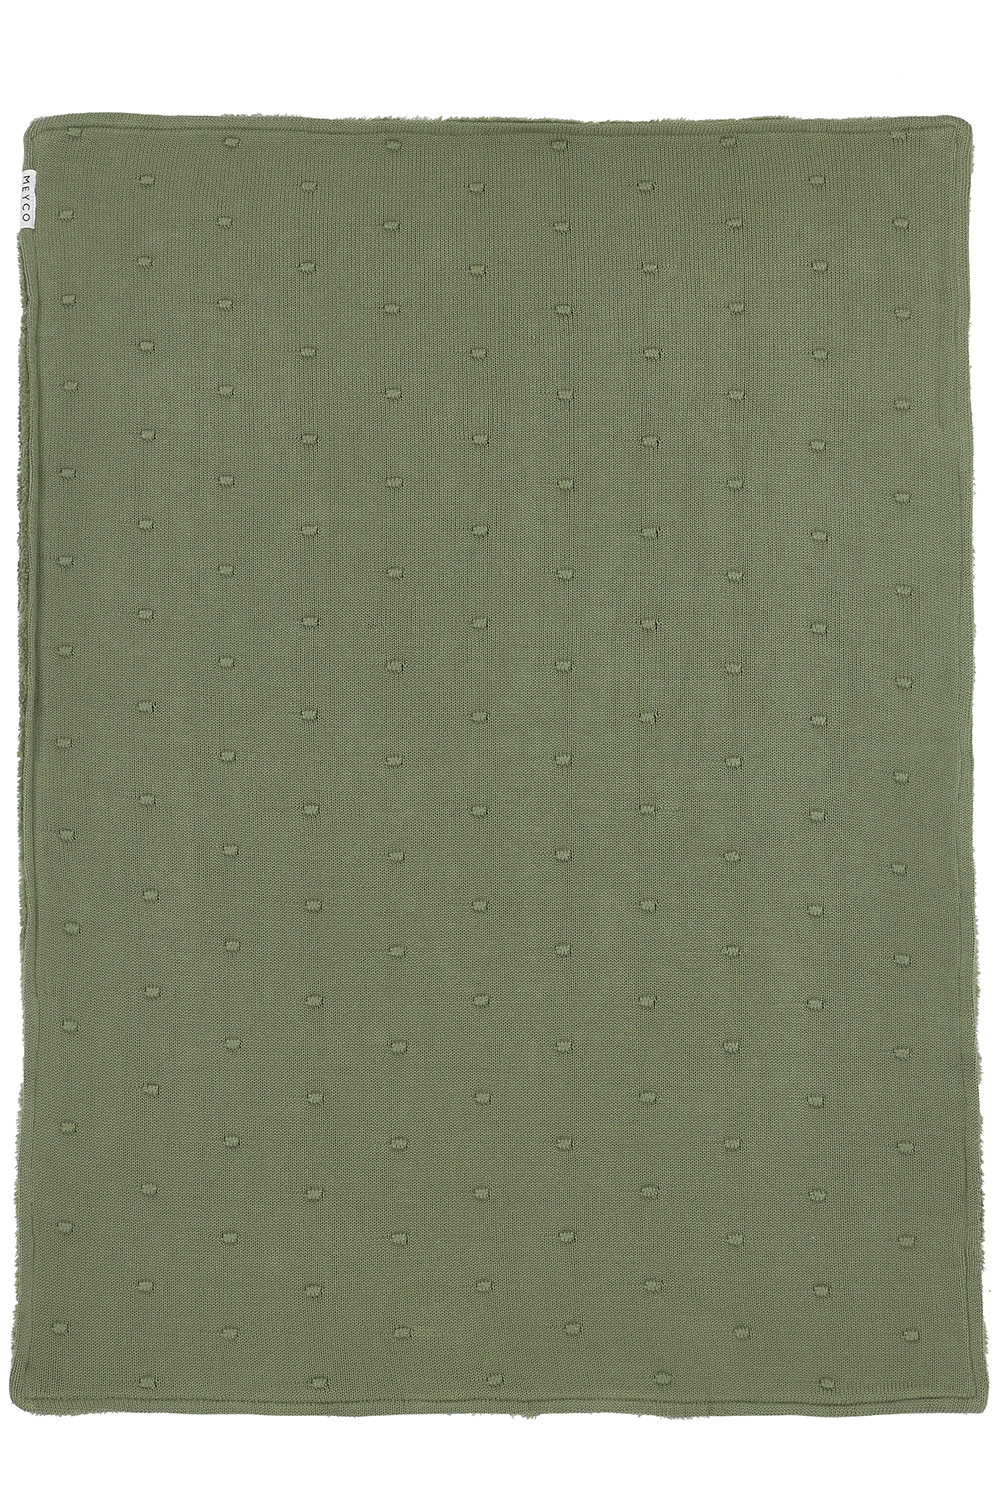 Ledikant deken Mini Knots teddy - forest green - 100x150cm